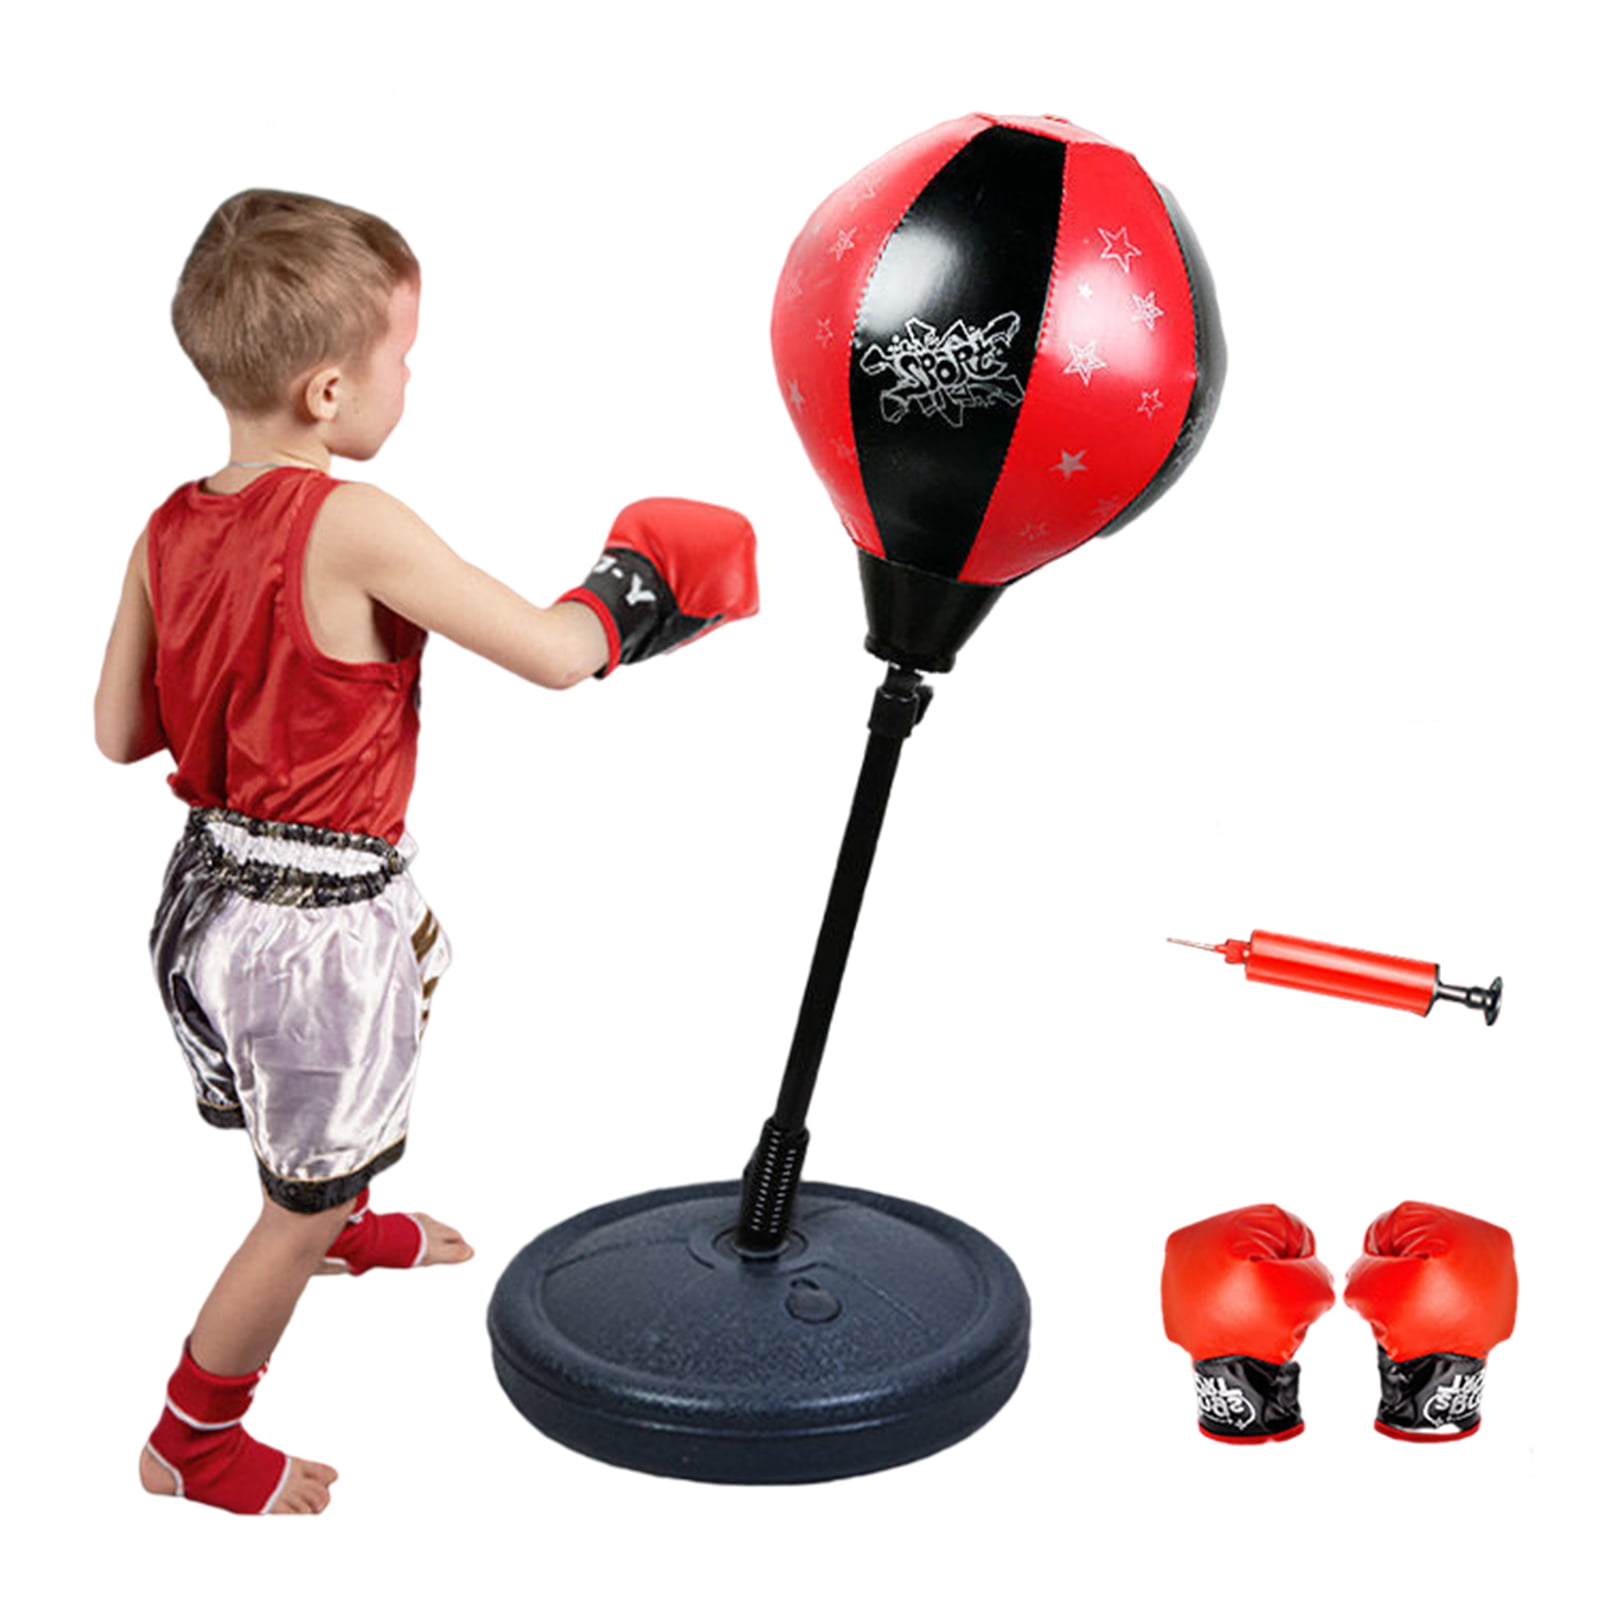 Junior Boxing SET Punch Bag & Gloves Kit Child Exercise Birthday Gift Toy Game 